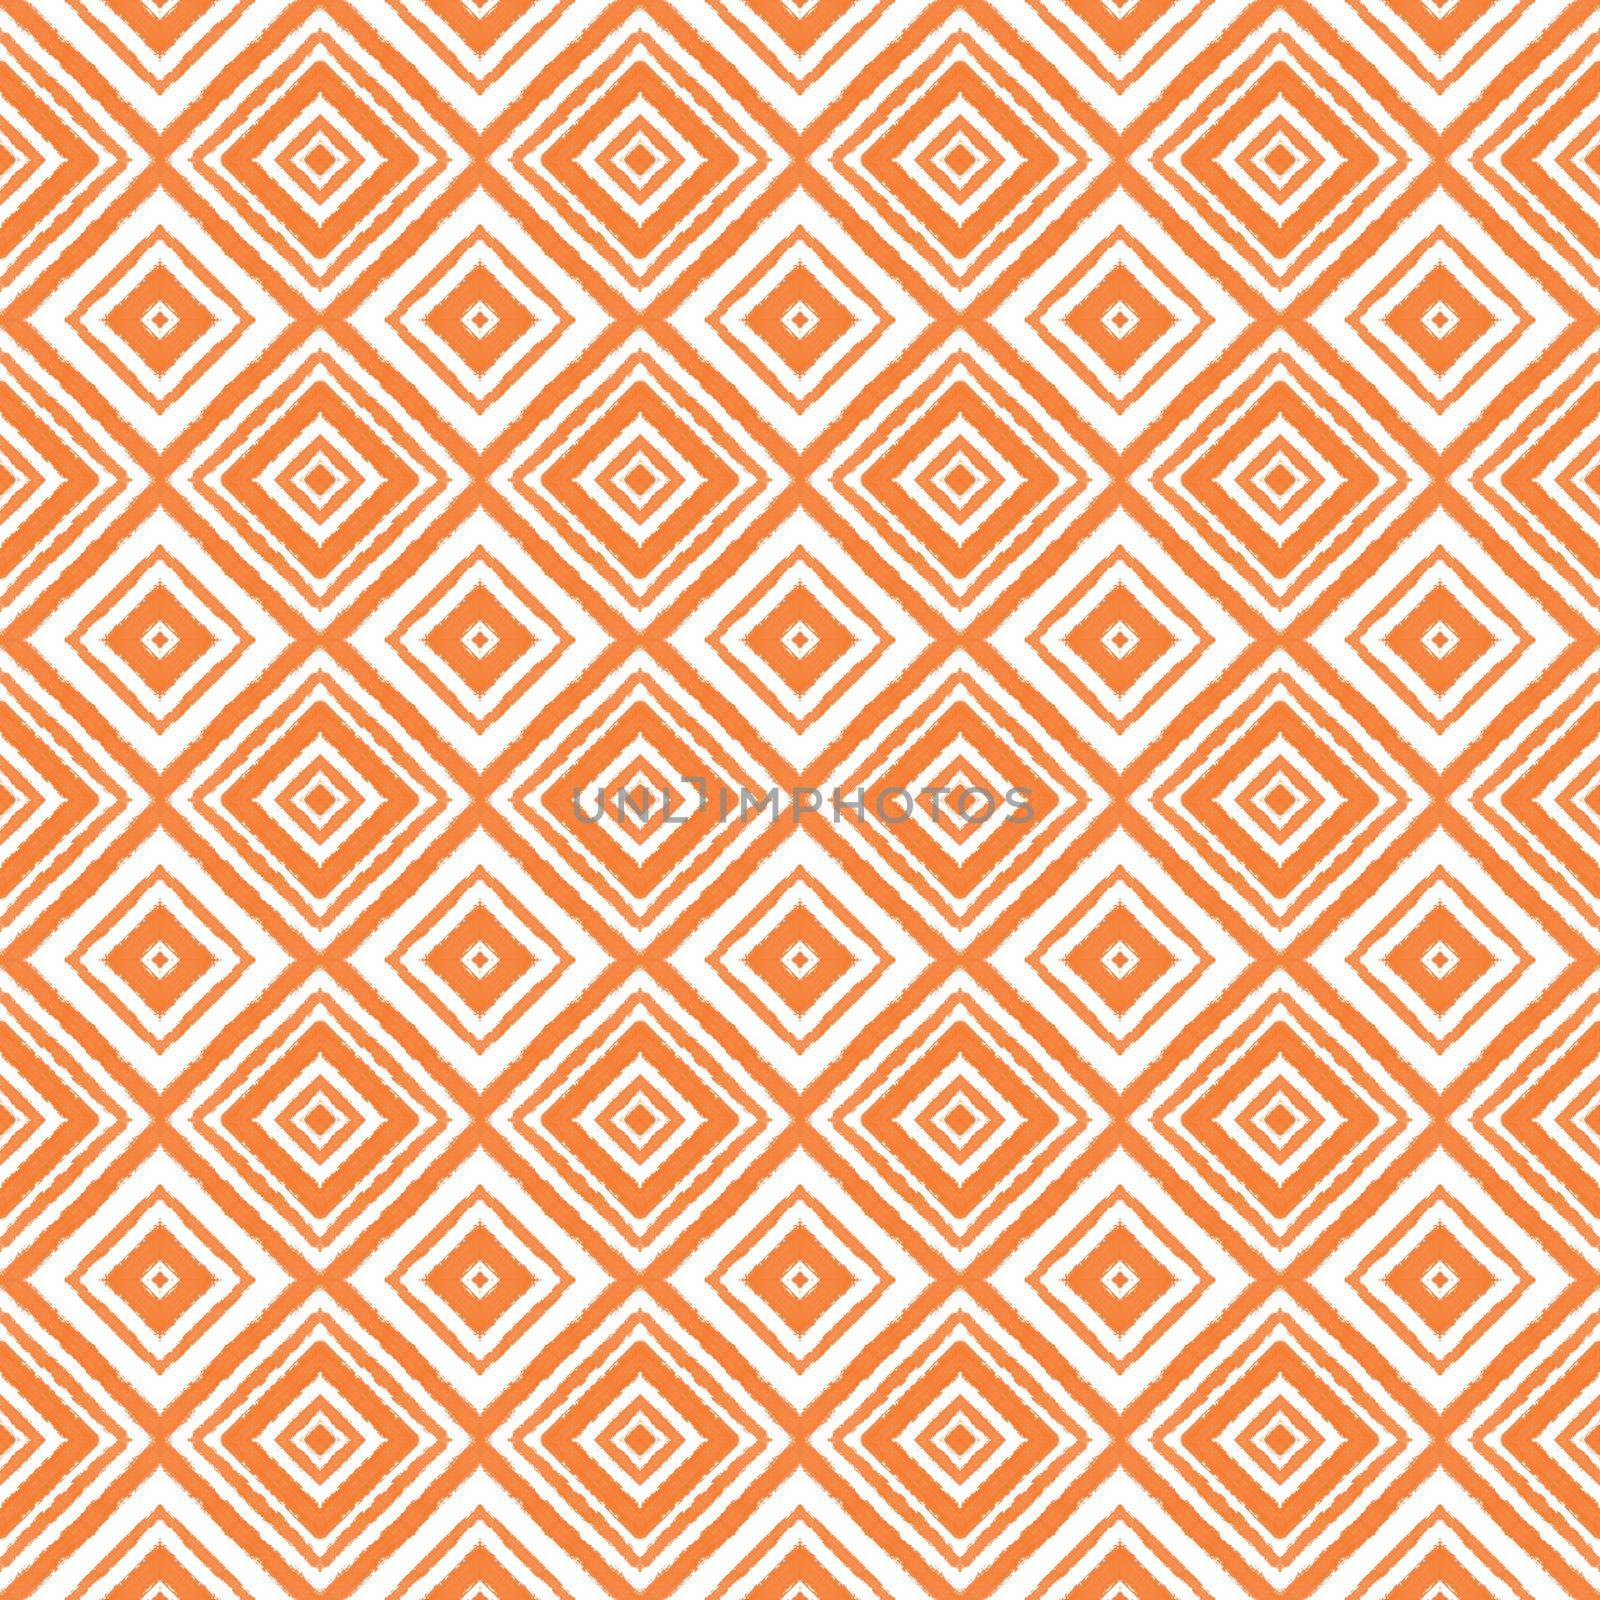 Tiled watercolor pattern. Orange symmetrical by beginagain